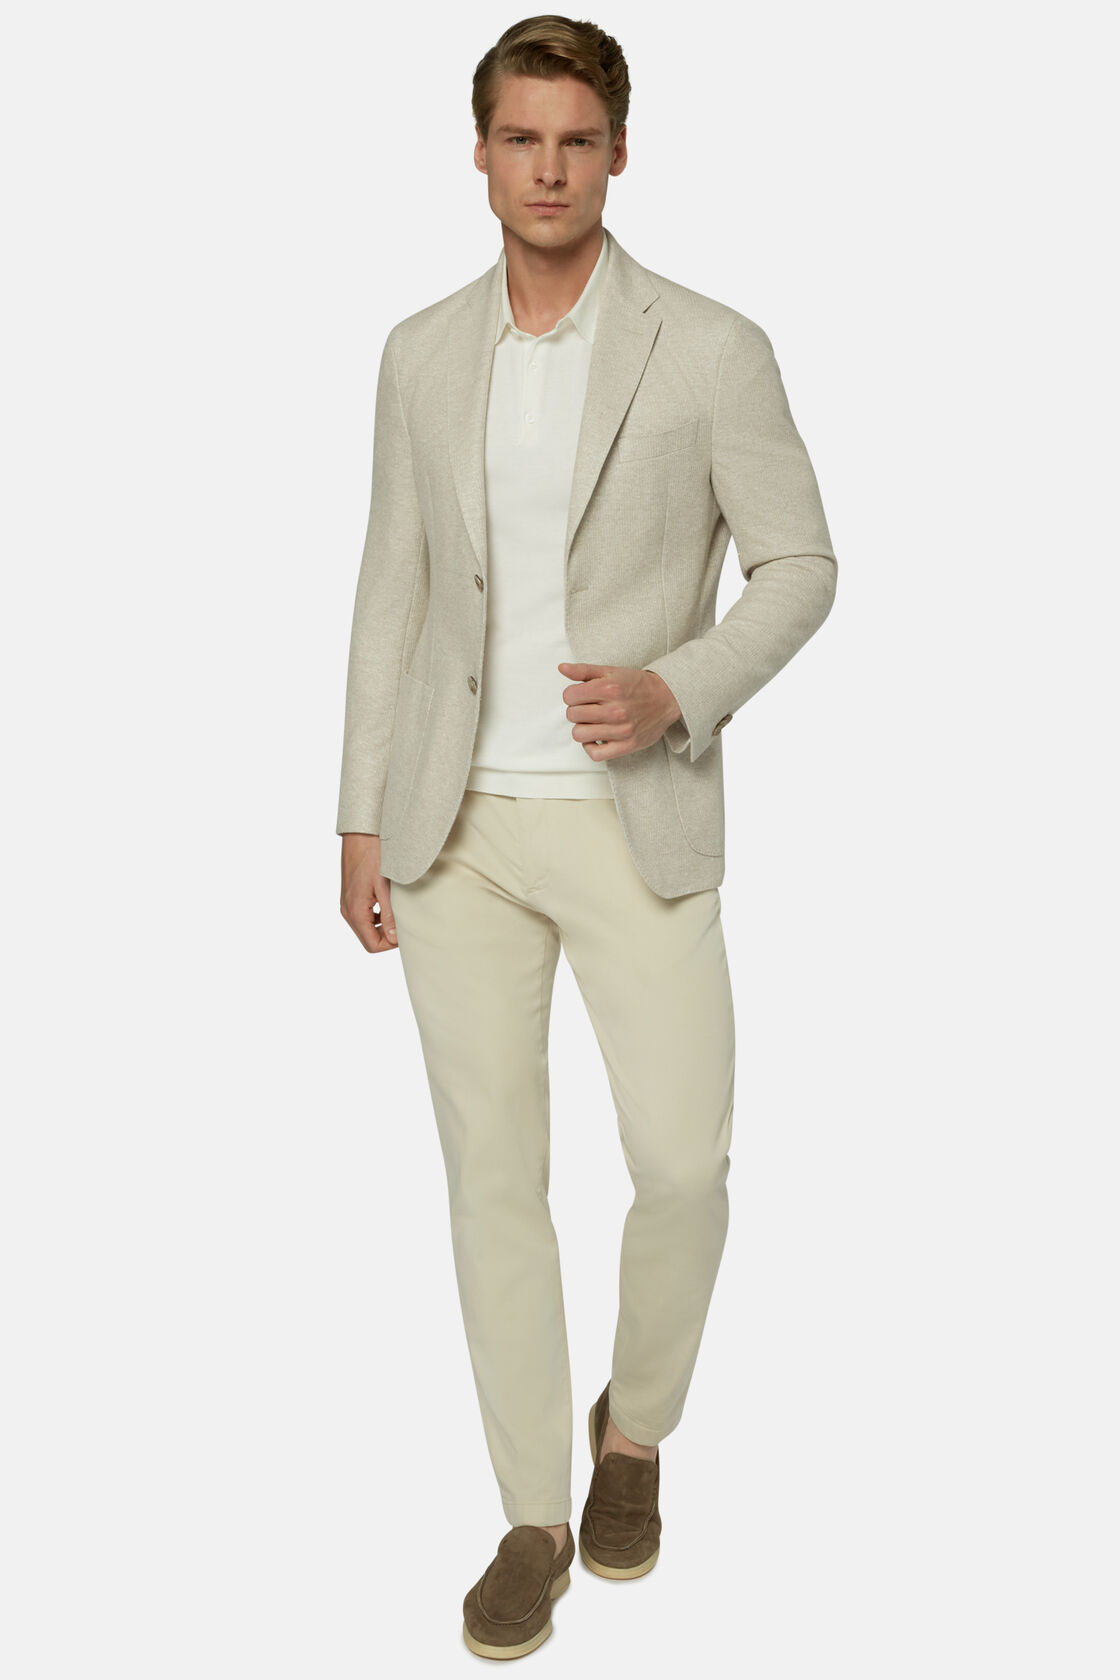 Beige Melange Linen/Cotton B Jersey Jacket, Beige, hi-res